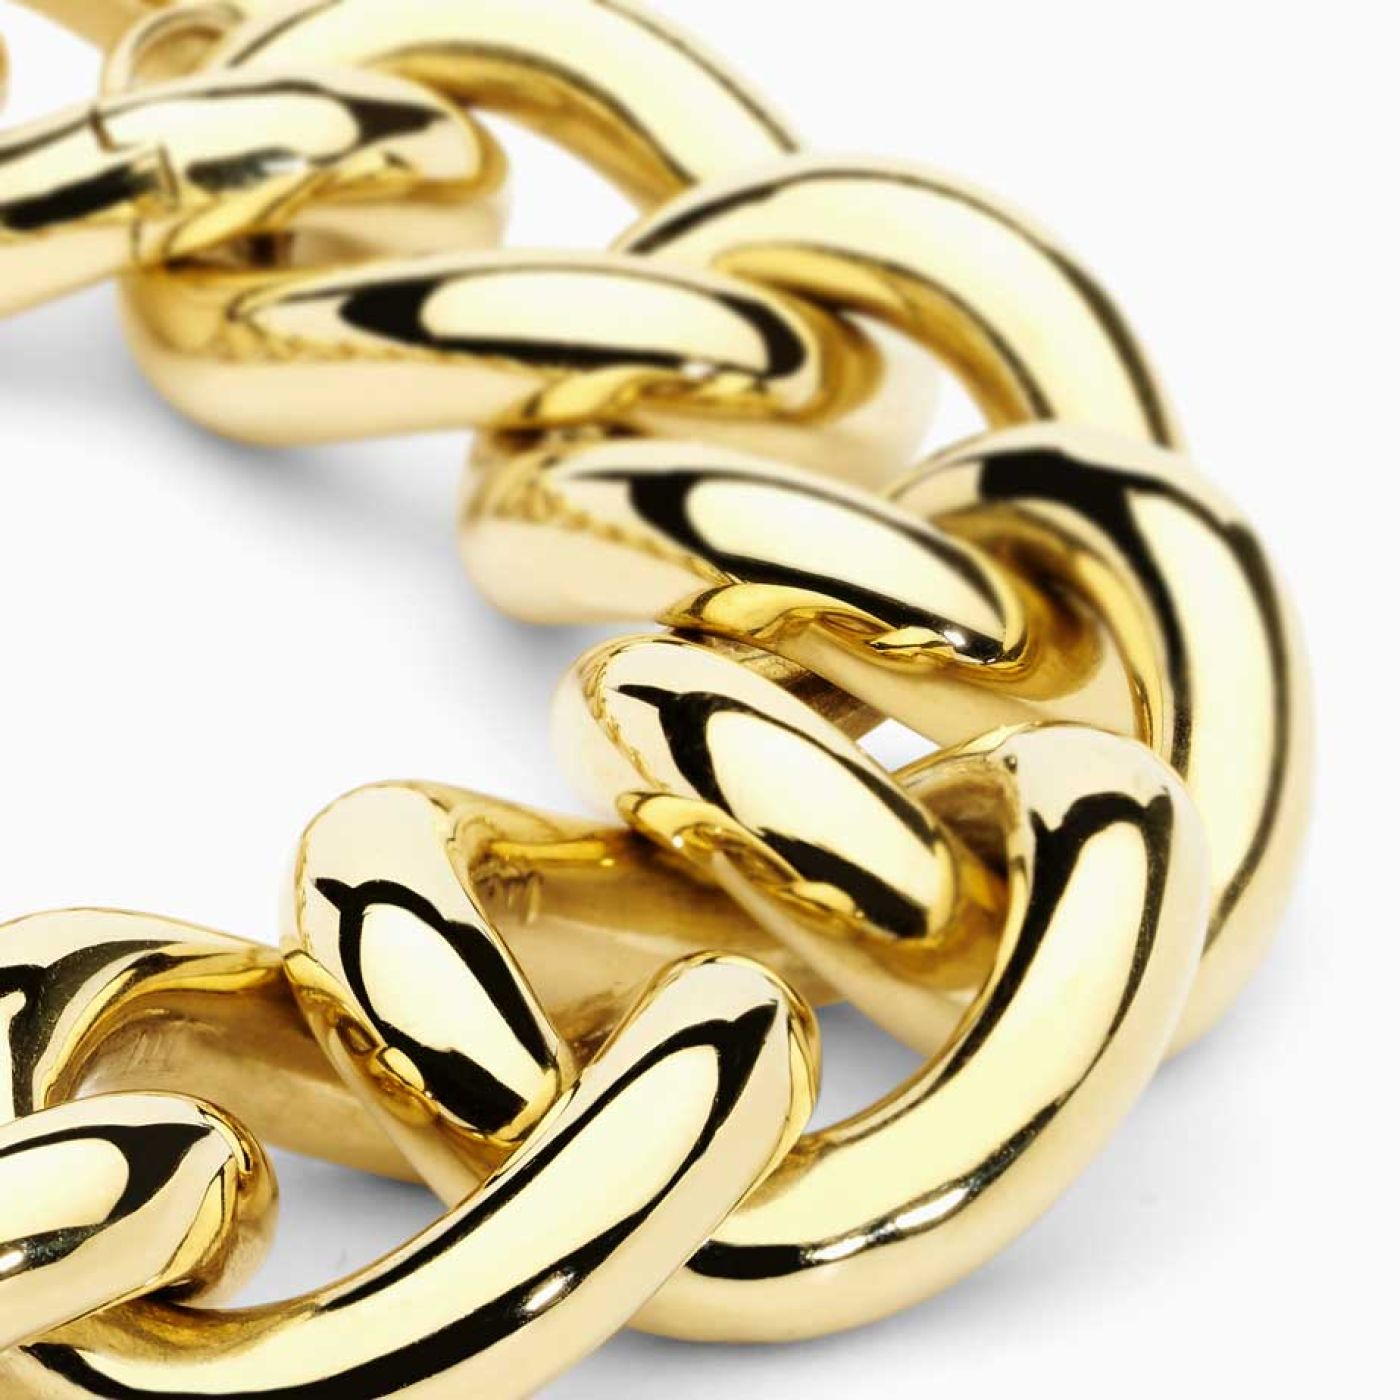 Yellow gold link bracelet